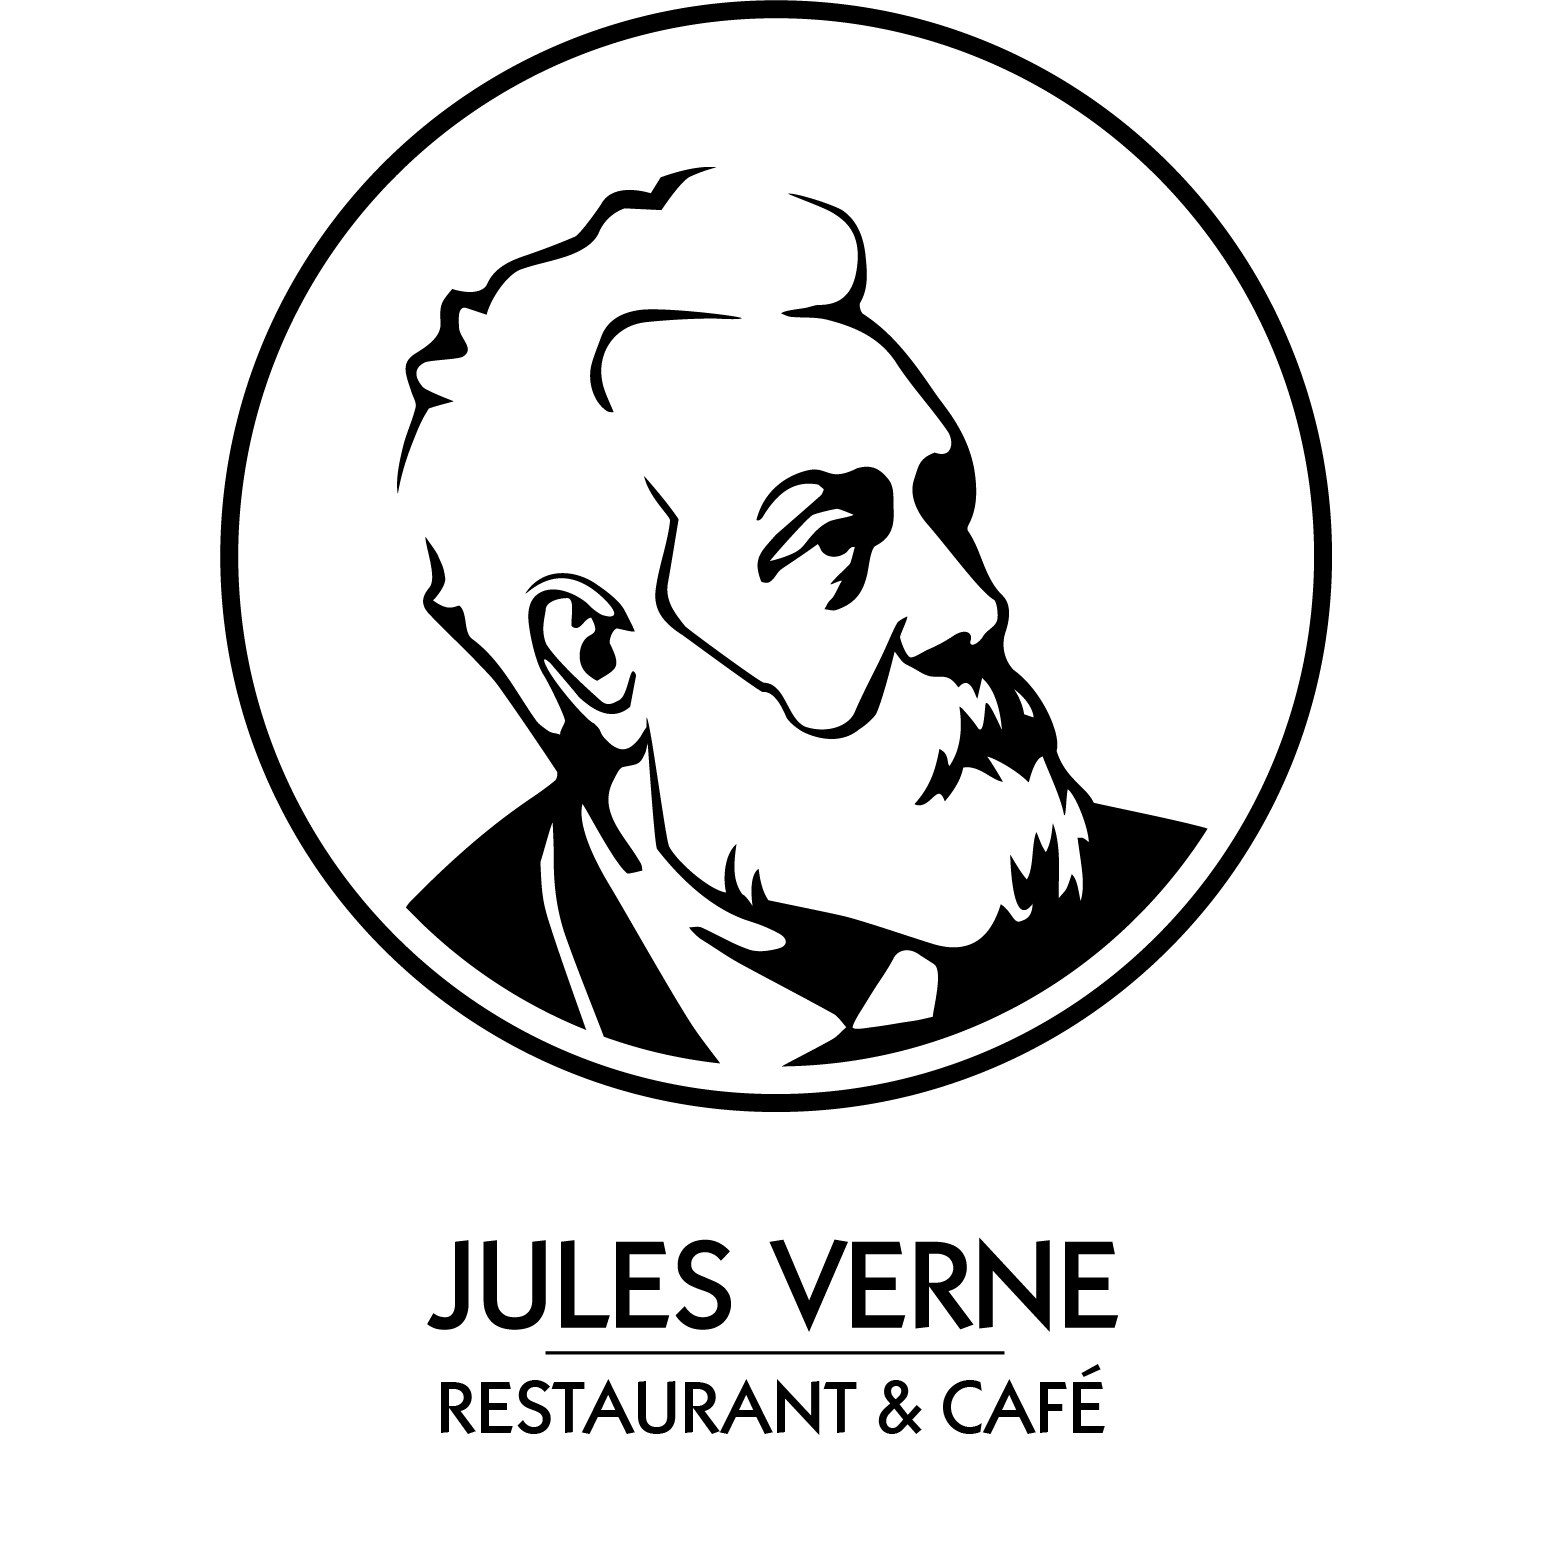 Jules Verne Restaurant & Café in Königswinter - Logo